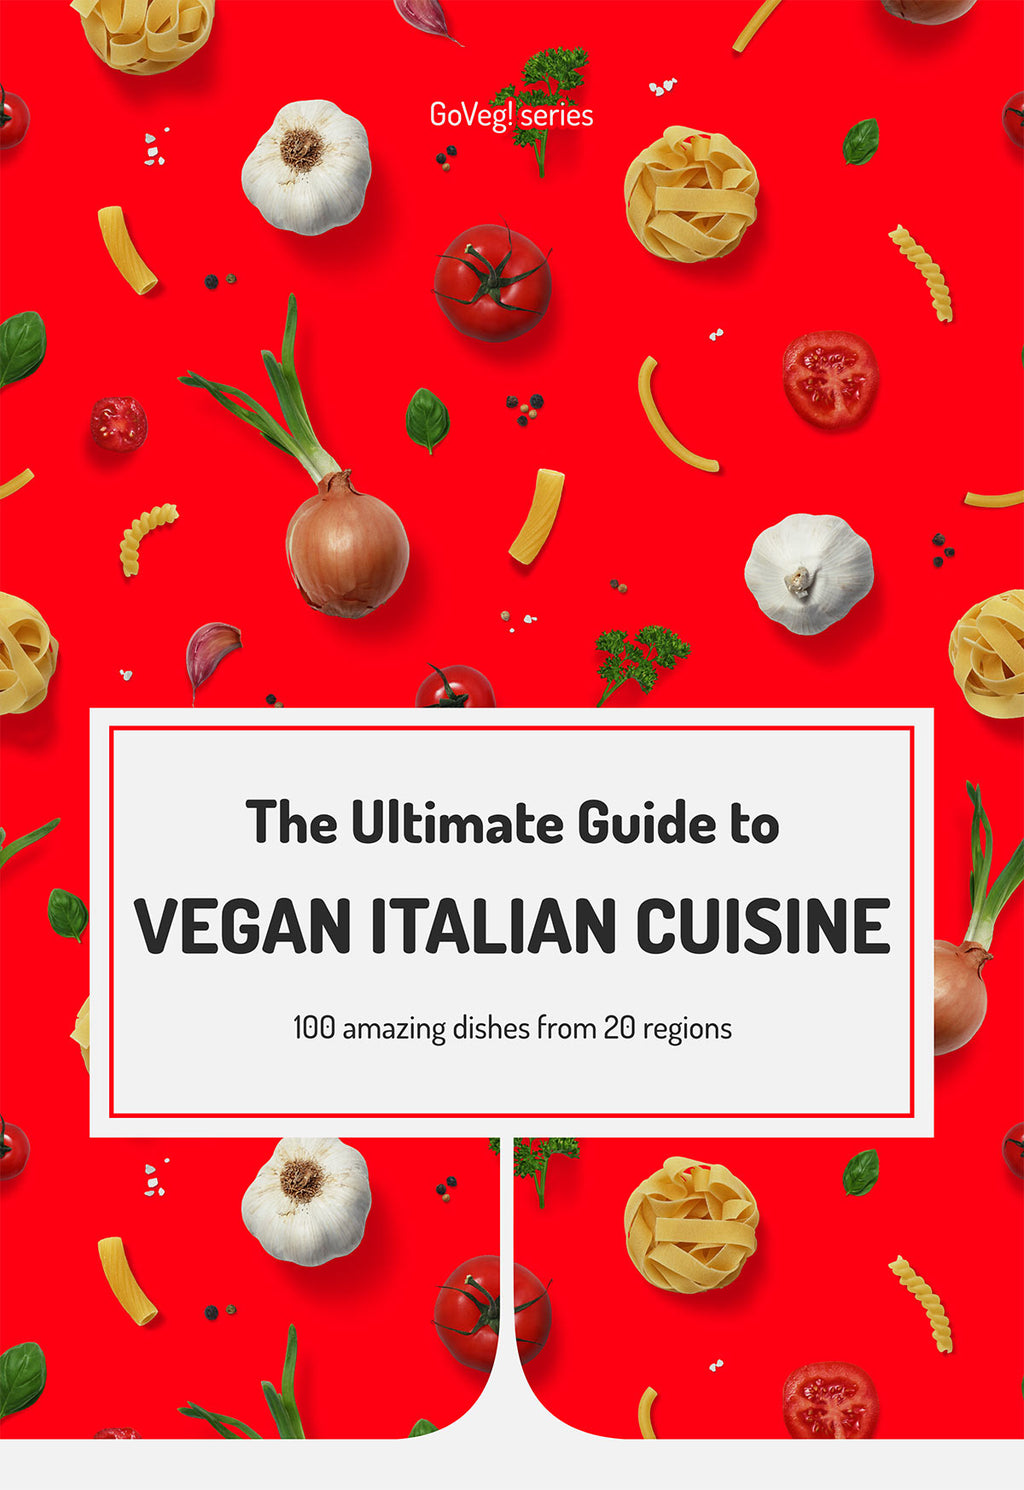 The Ultimate Guide To Vegan Italian Cuisine (GoVeg!) eBook